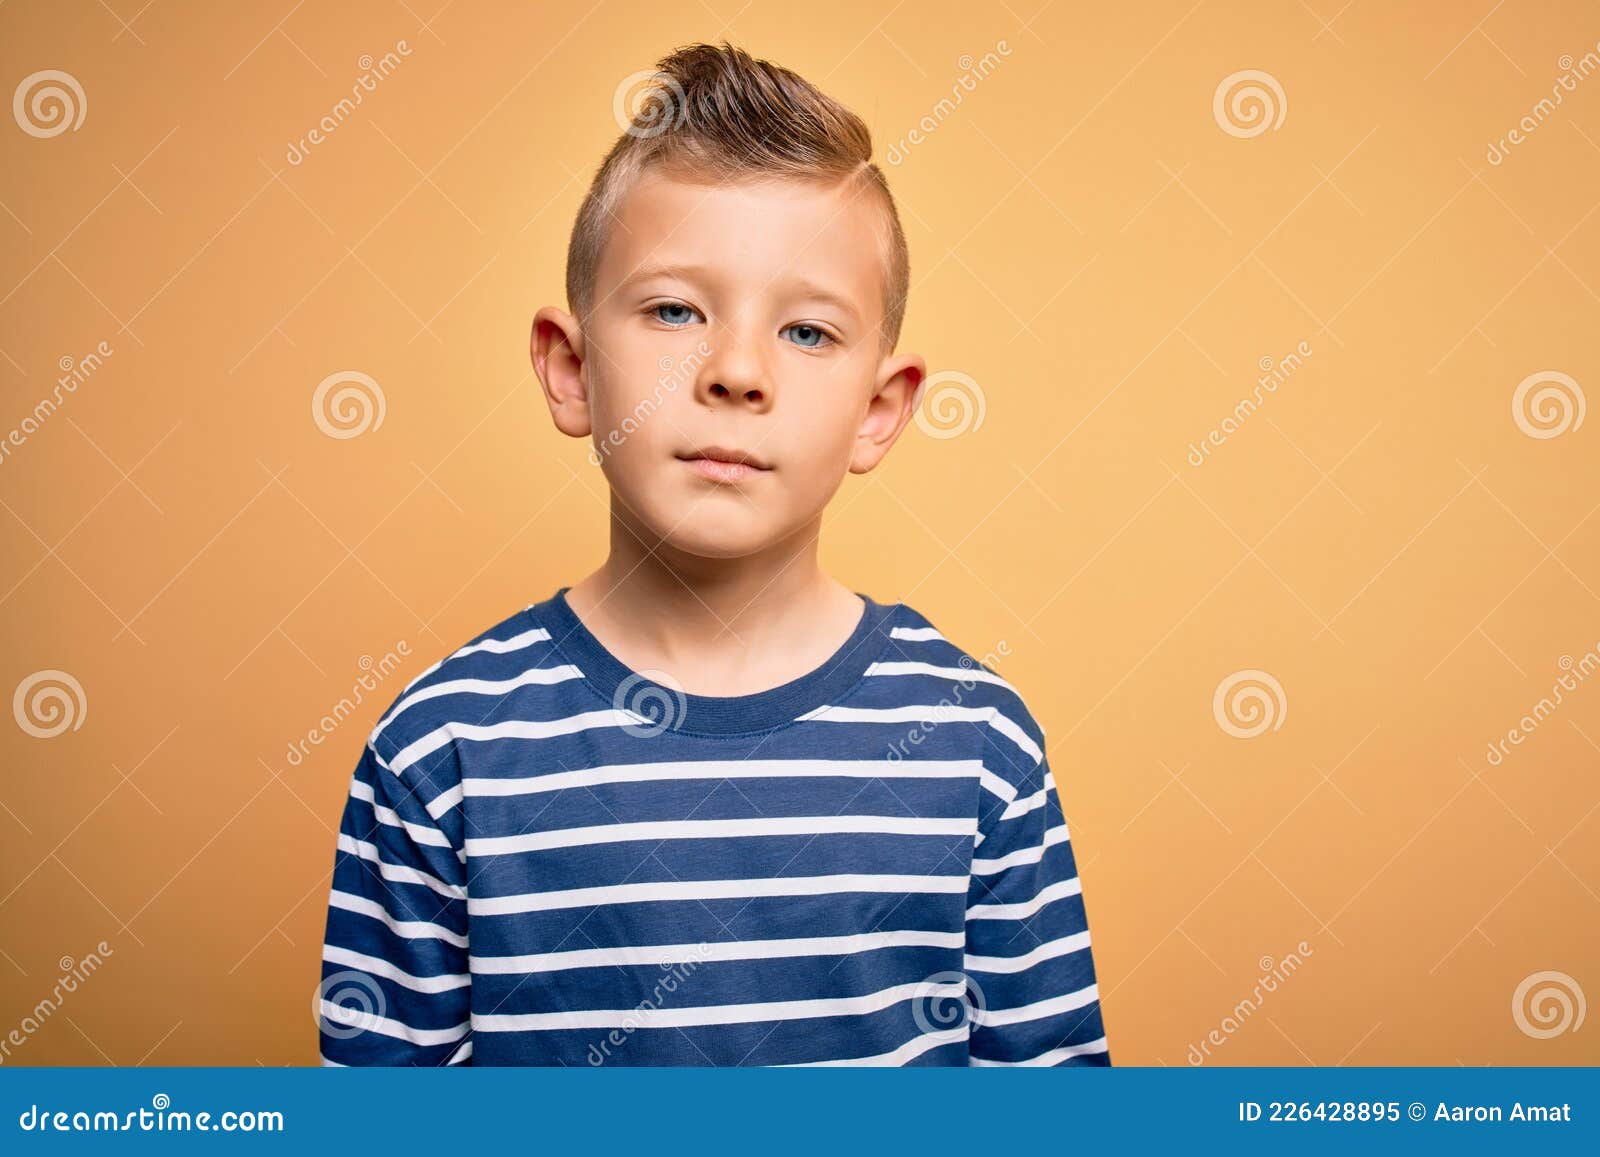 kid with blue medium hair